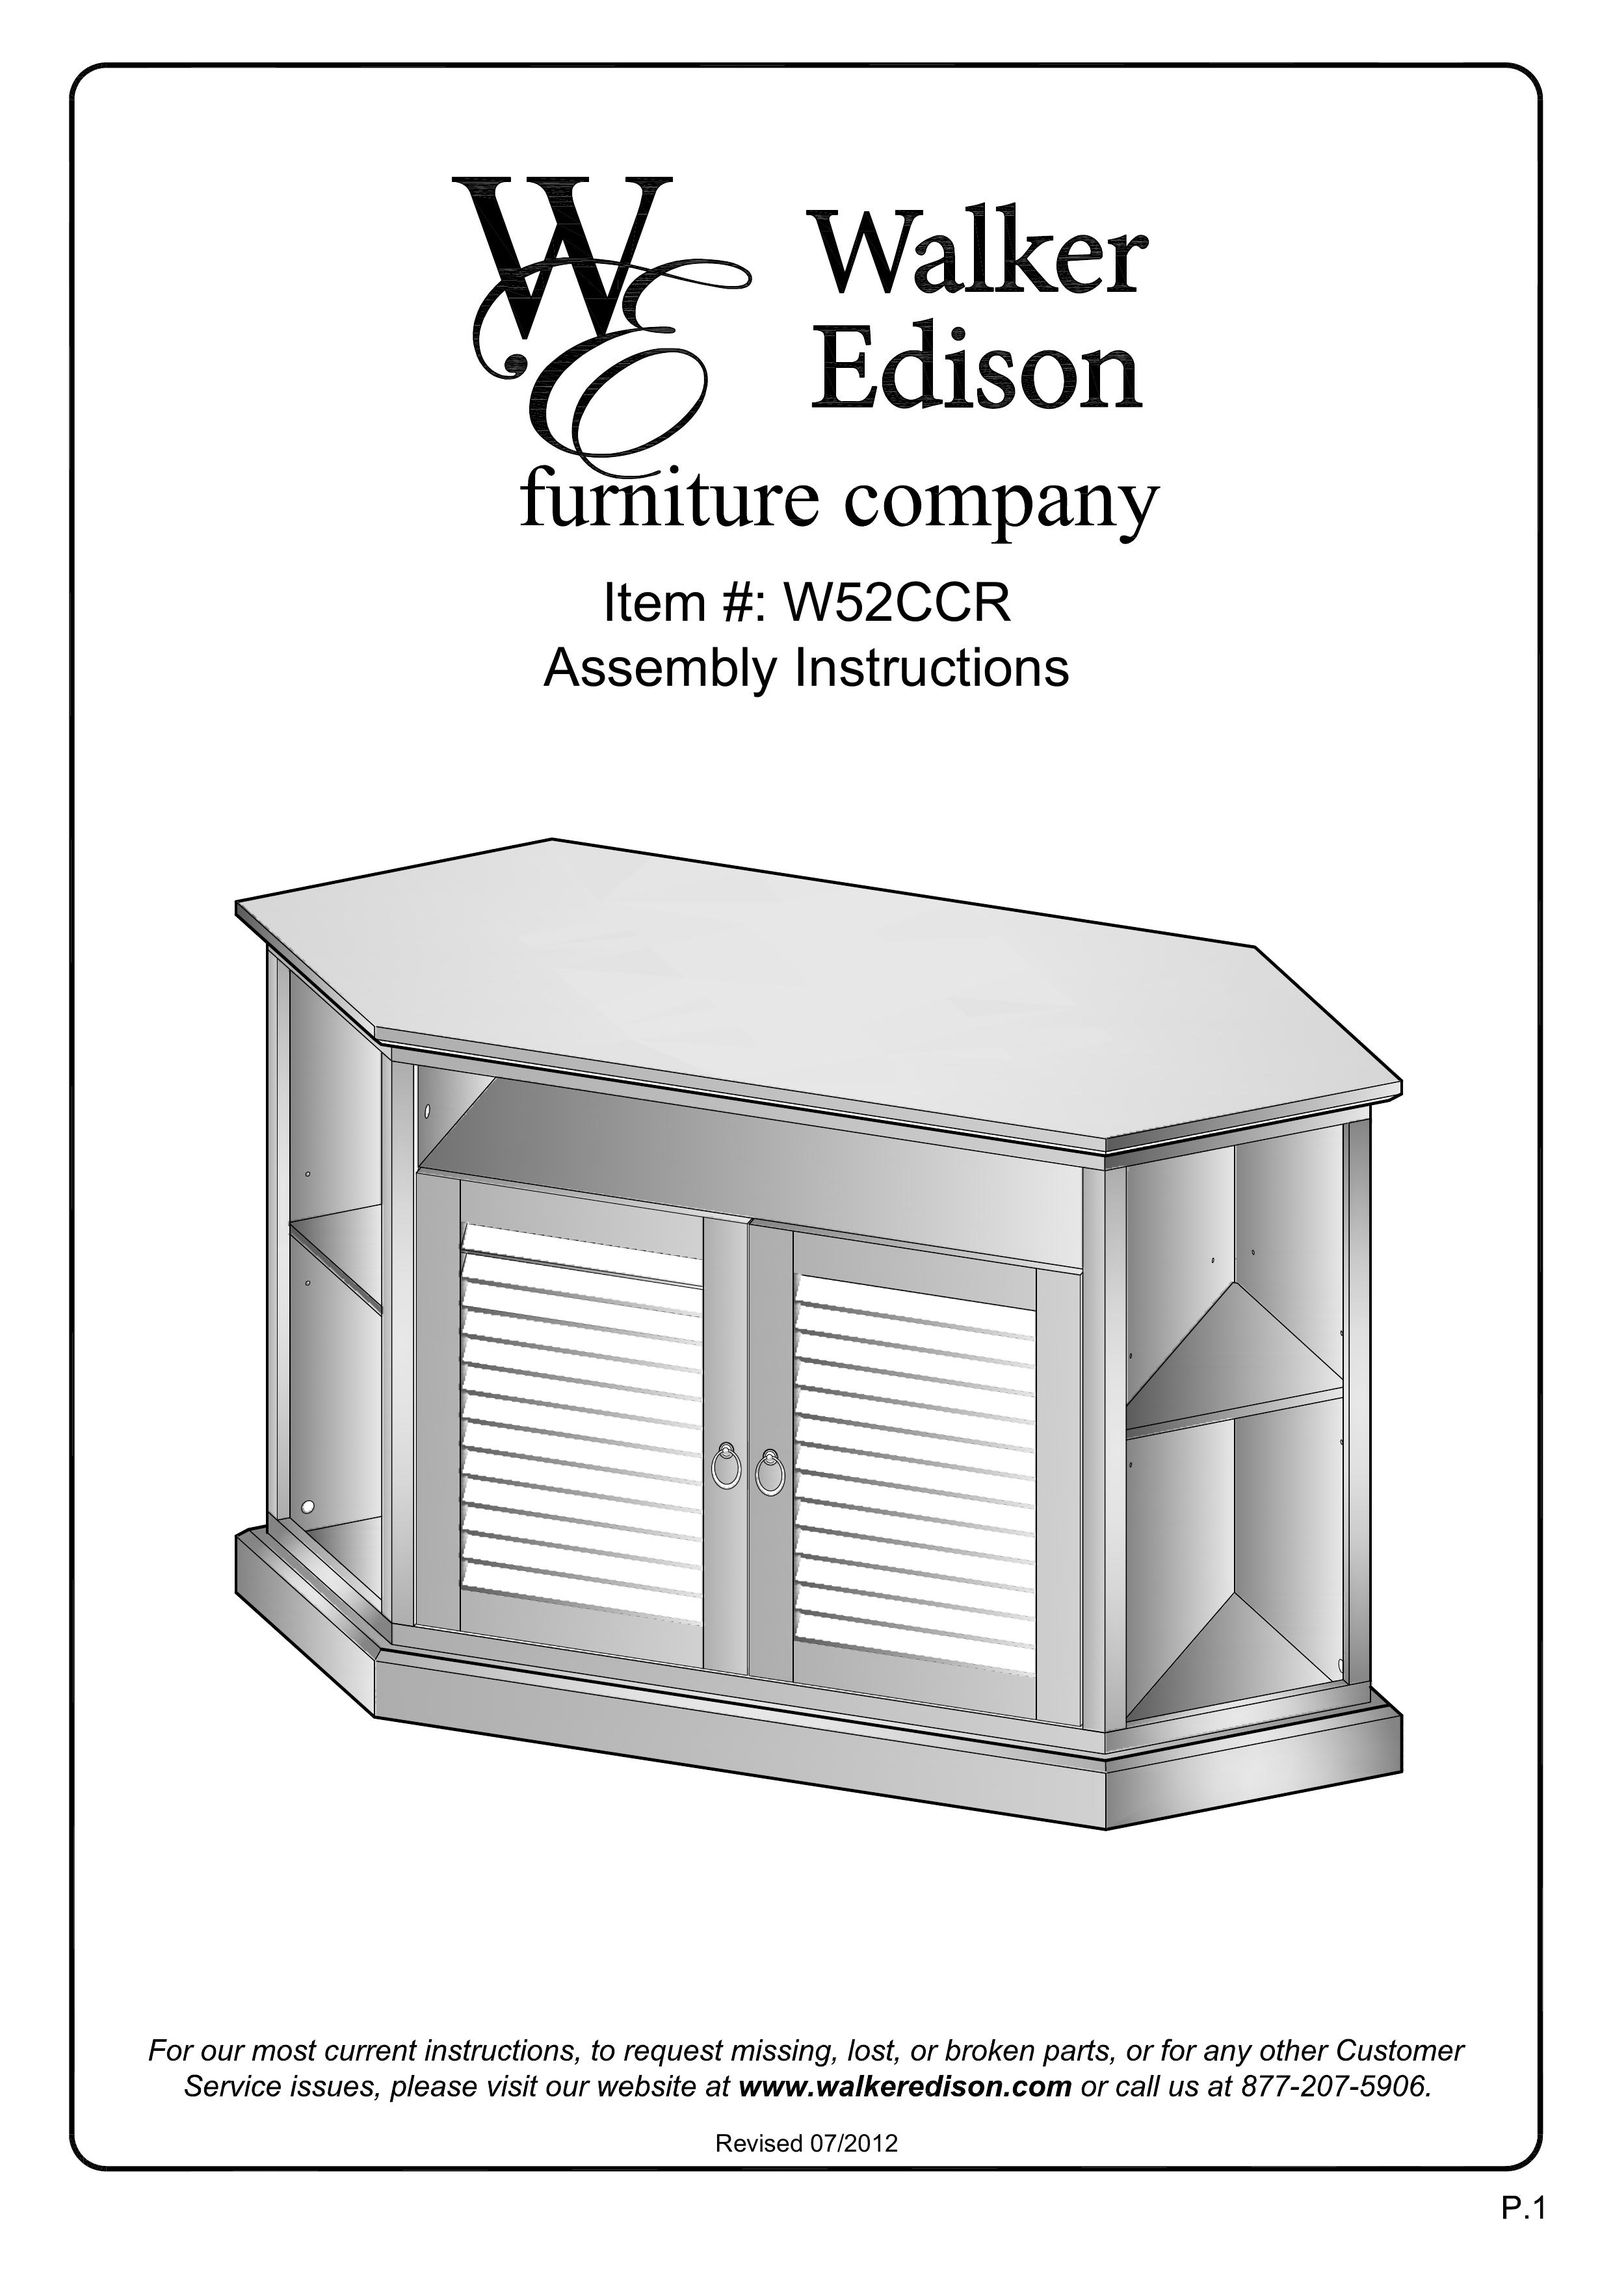 Walker W52CCRBL Indoor Furnishings User Manual